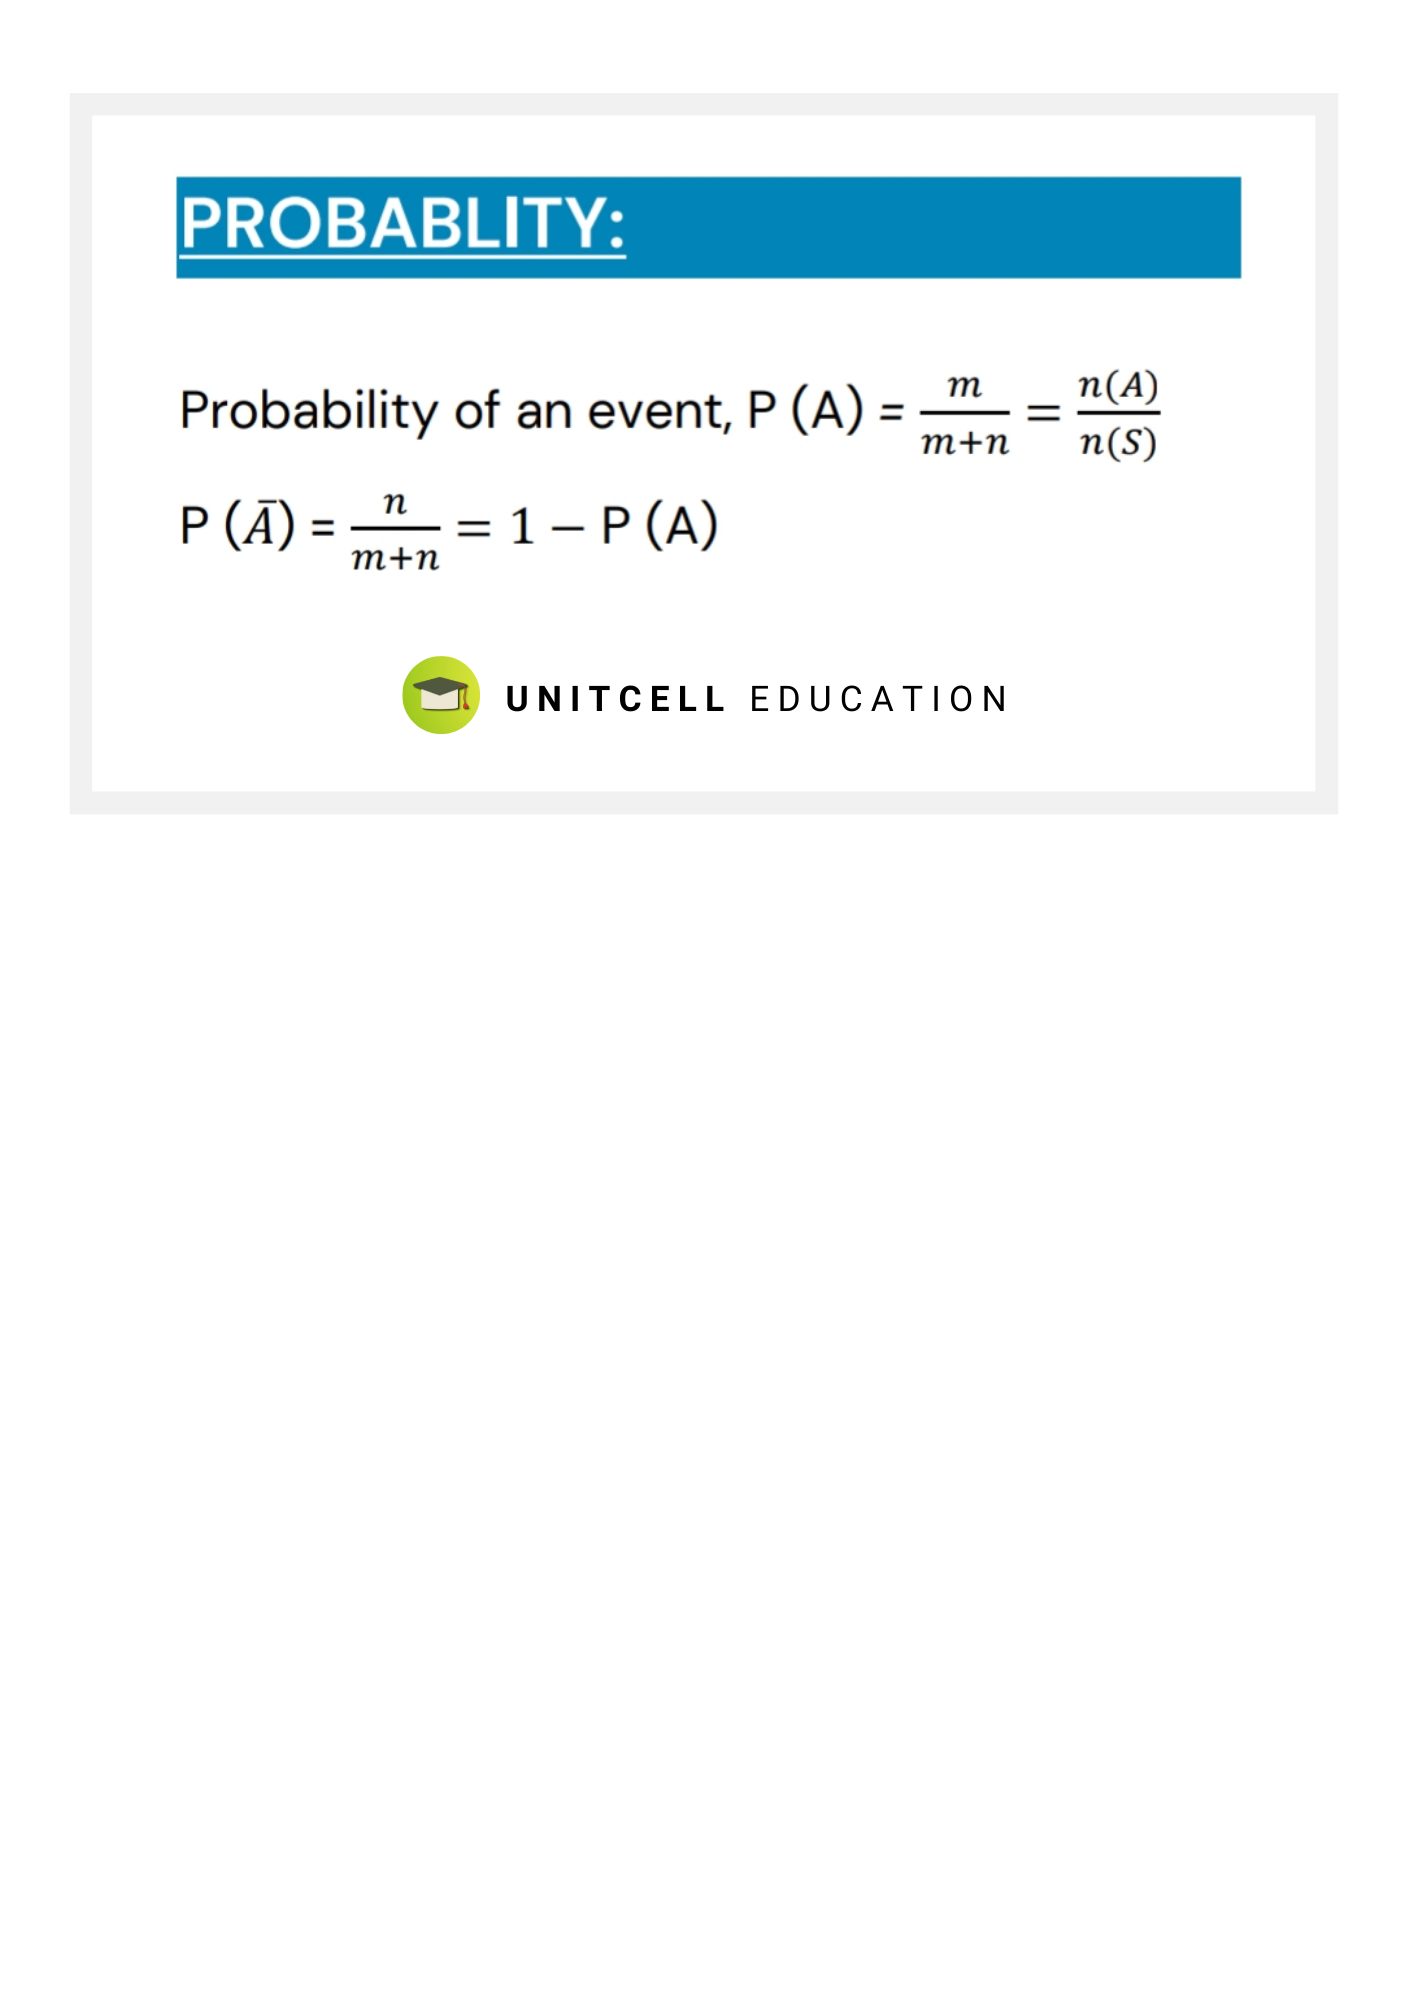 Probability formulas